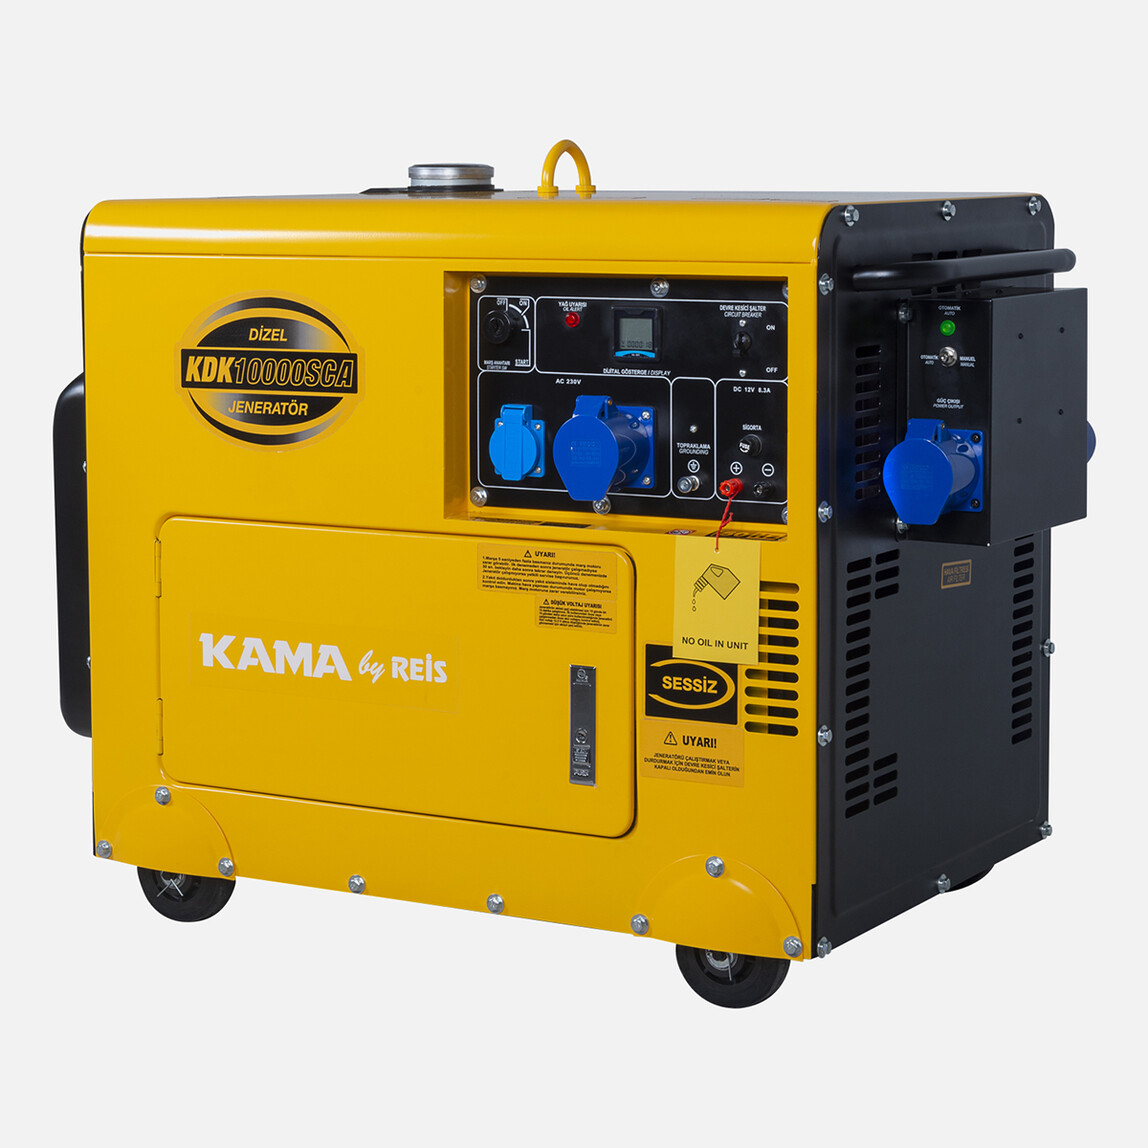    Kama KDK10000SCA 9.4 kVa Monofaze Dizel İpli - Marşlı Jeneratör  